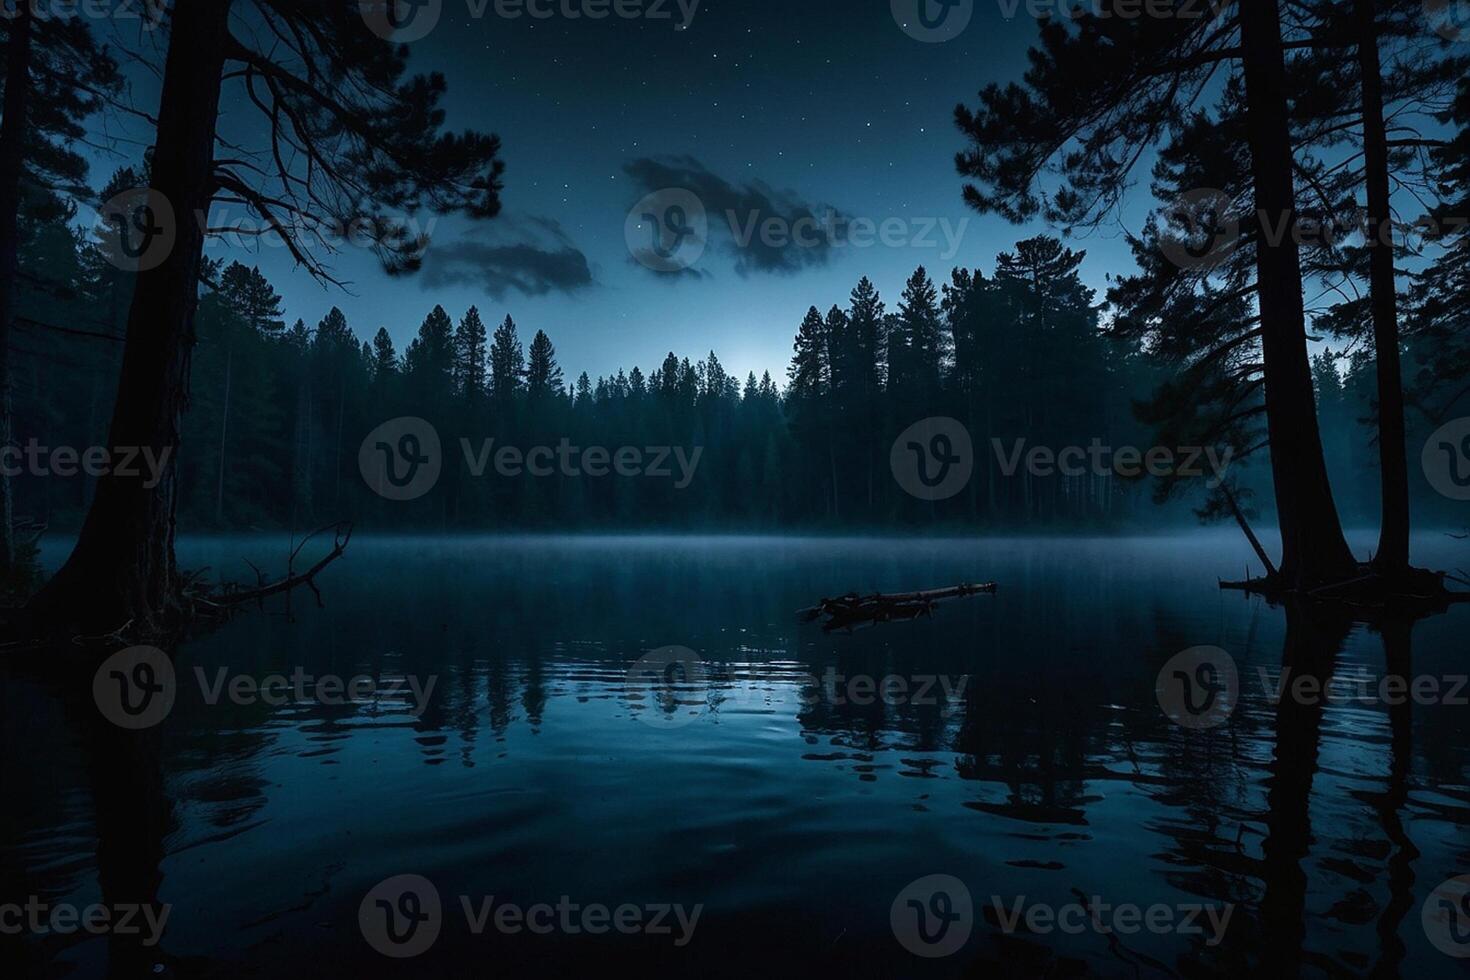 a full moon rises over a lake at night photo